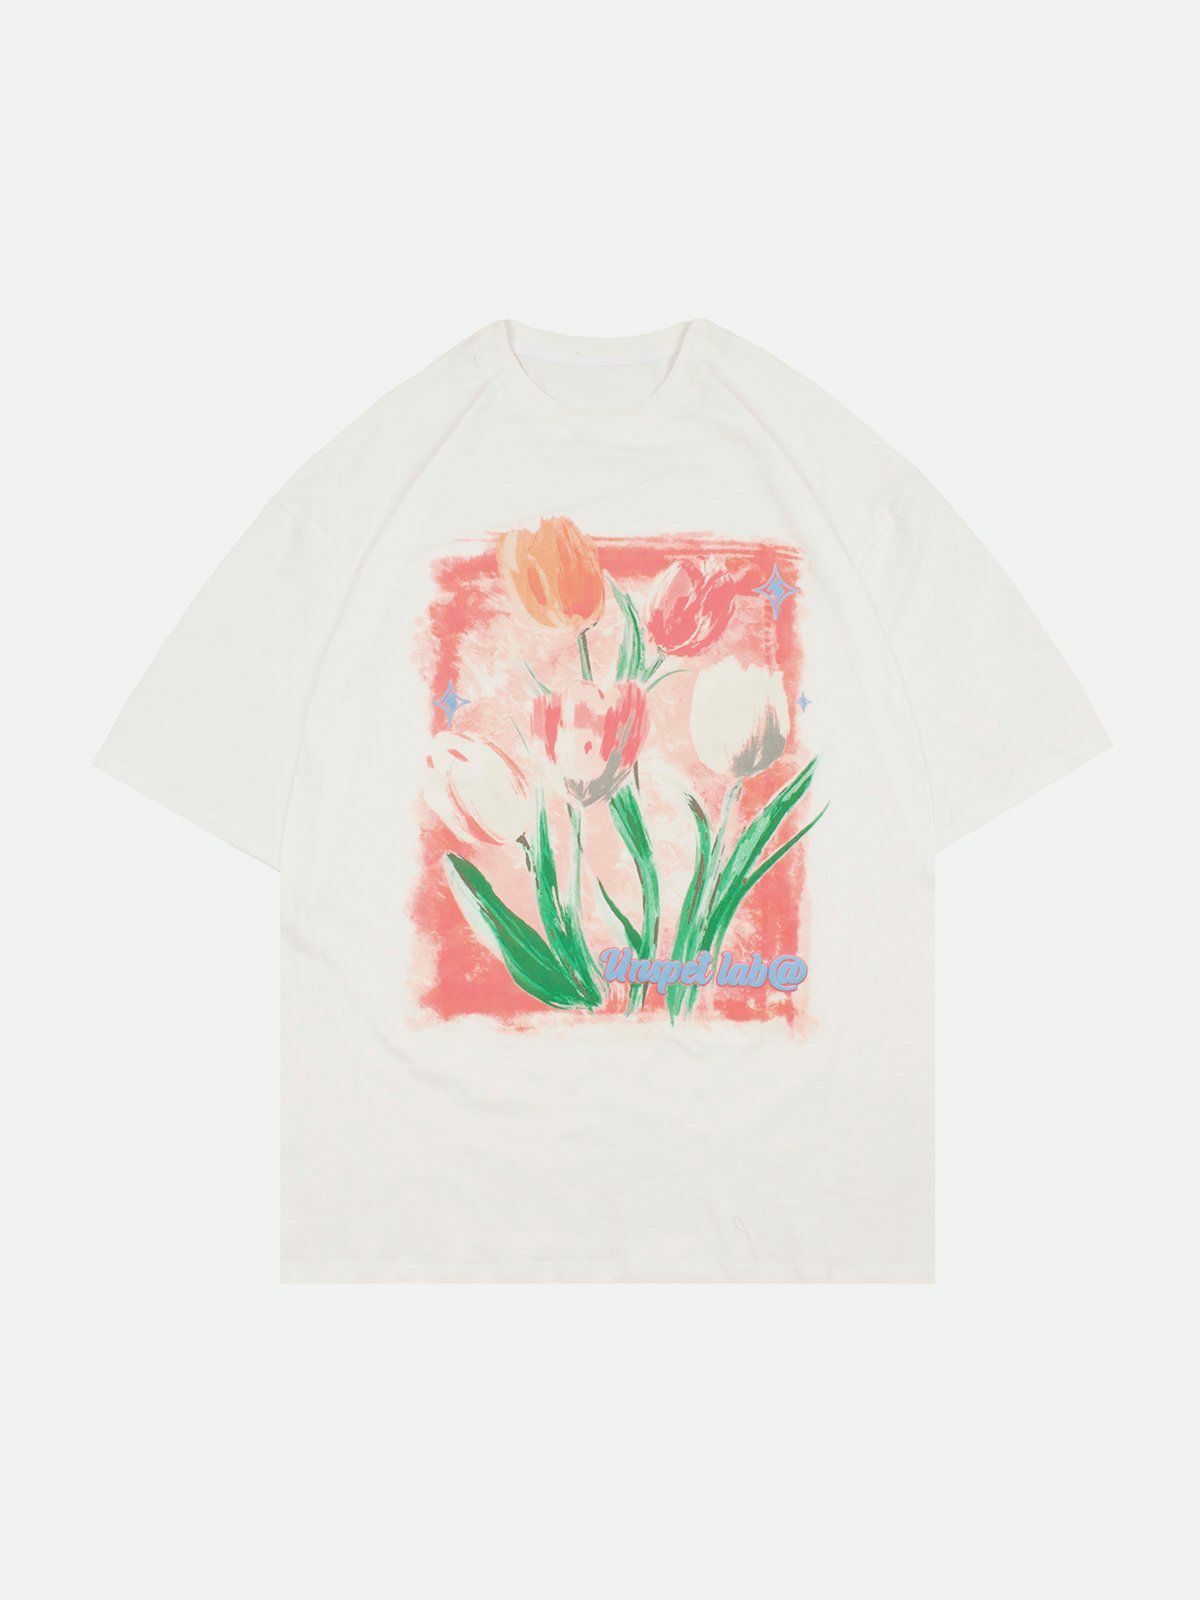 retro flower power tee vibrant  edgy y2k graphic shirt 1160